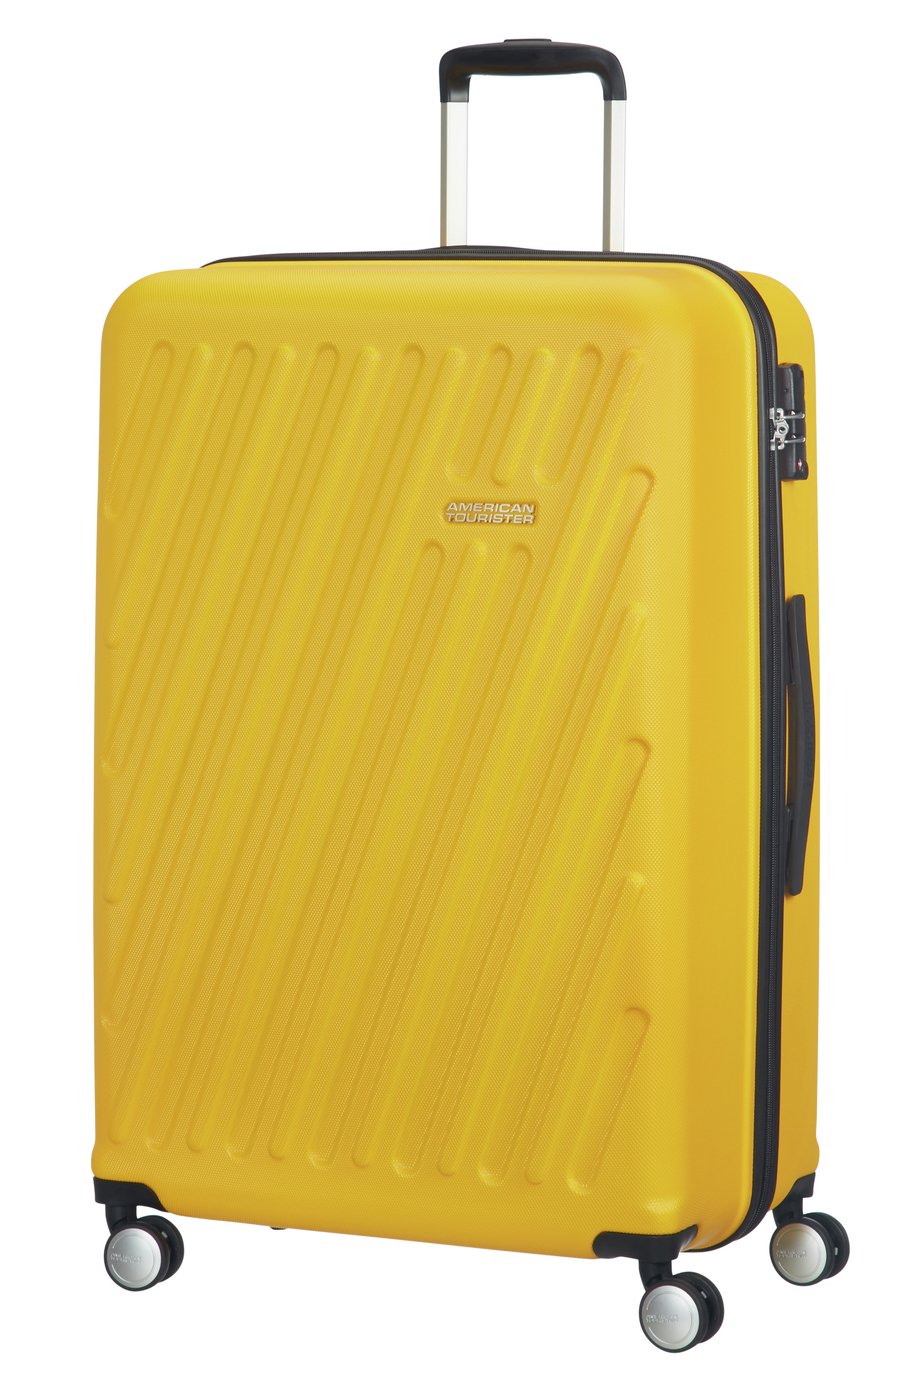 yellow it suitcase